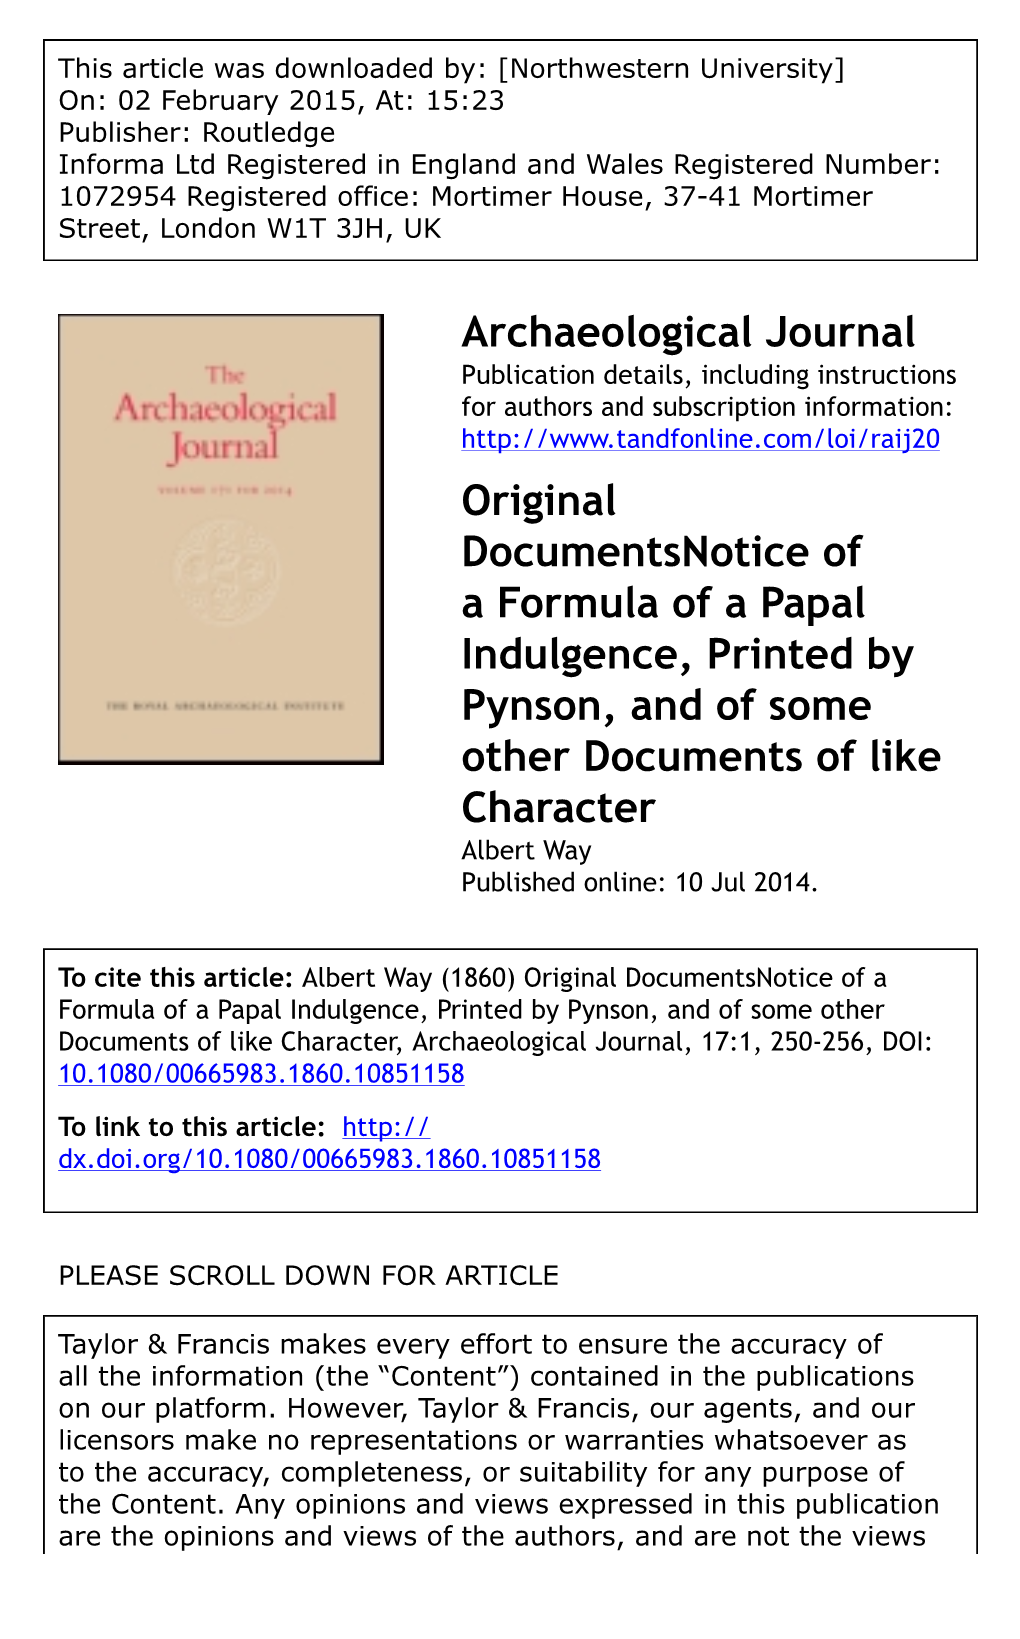 Archaeological Journal Original Documentsnotice of a Formula of A